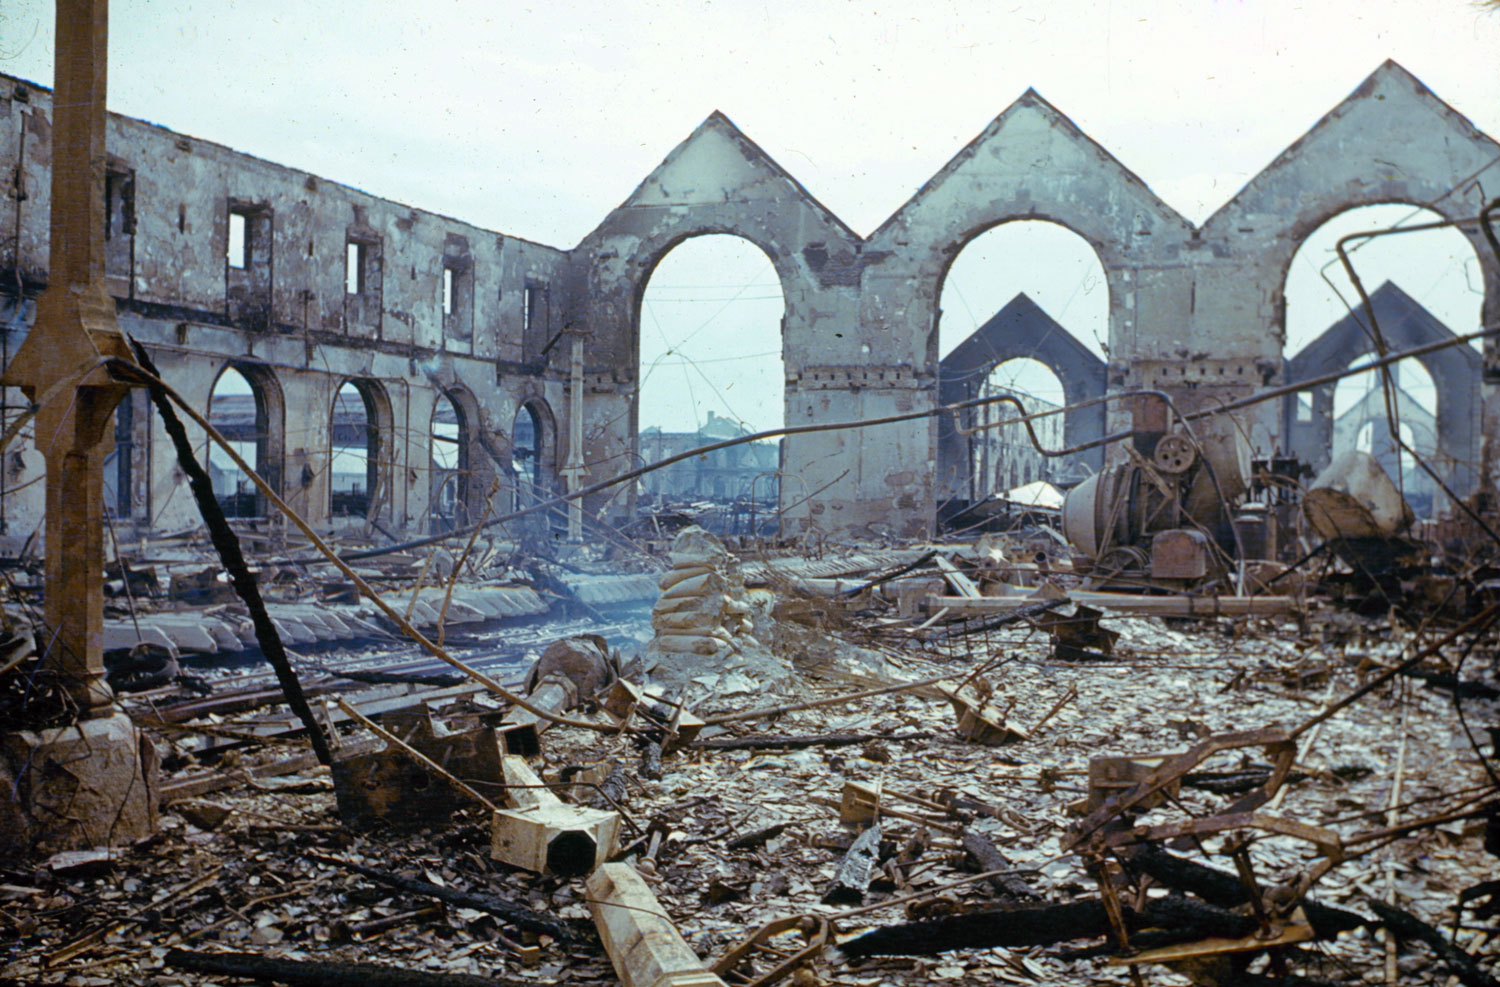 Ruins, northwestern France, summer 1944, after D-Day.